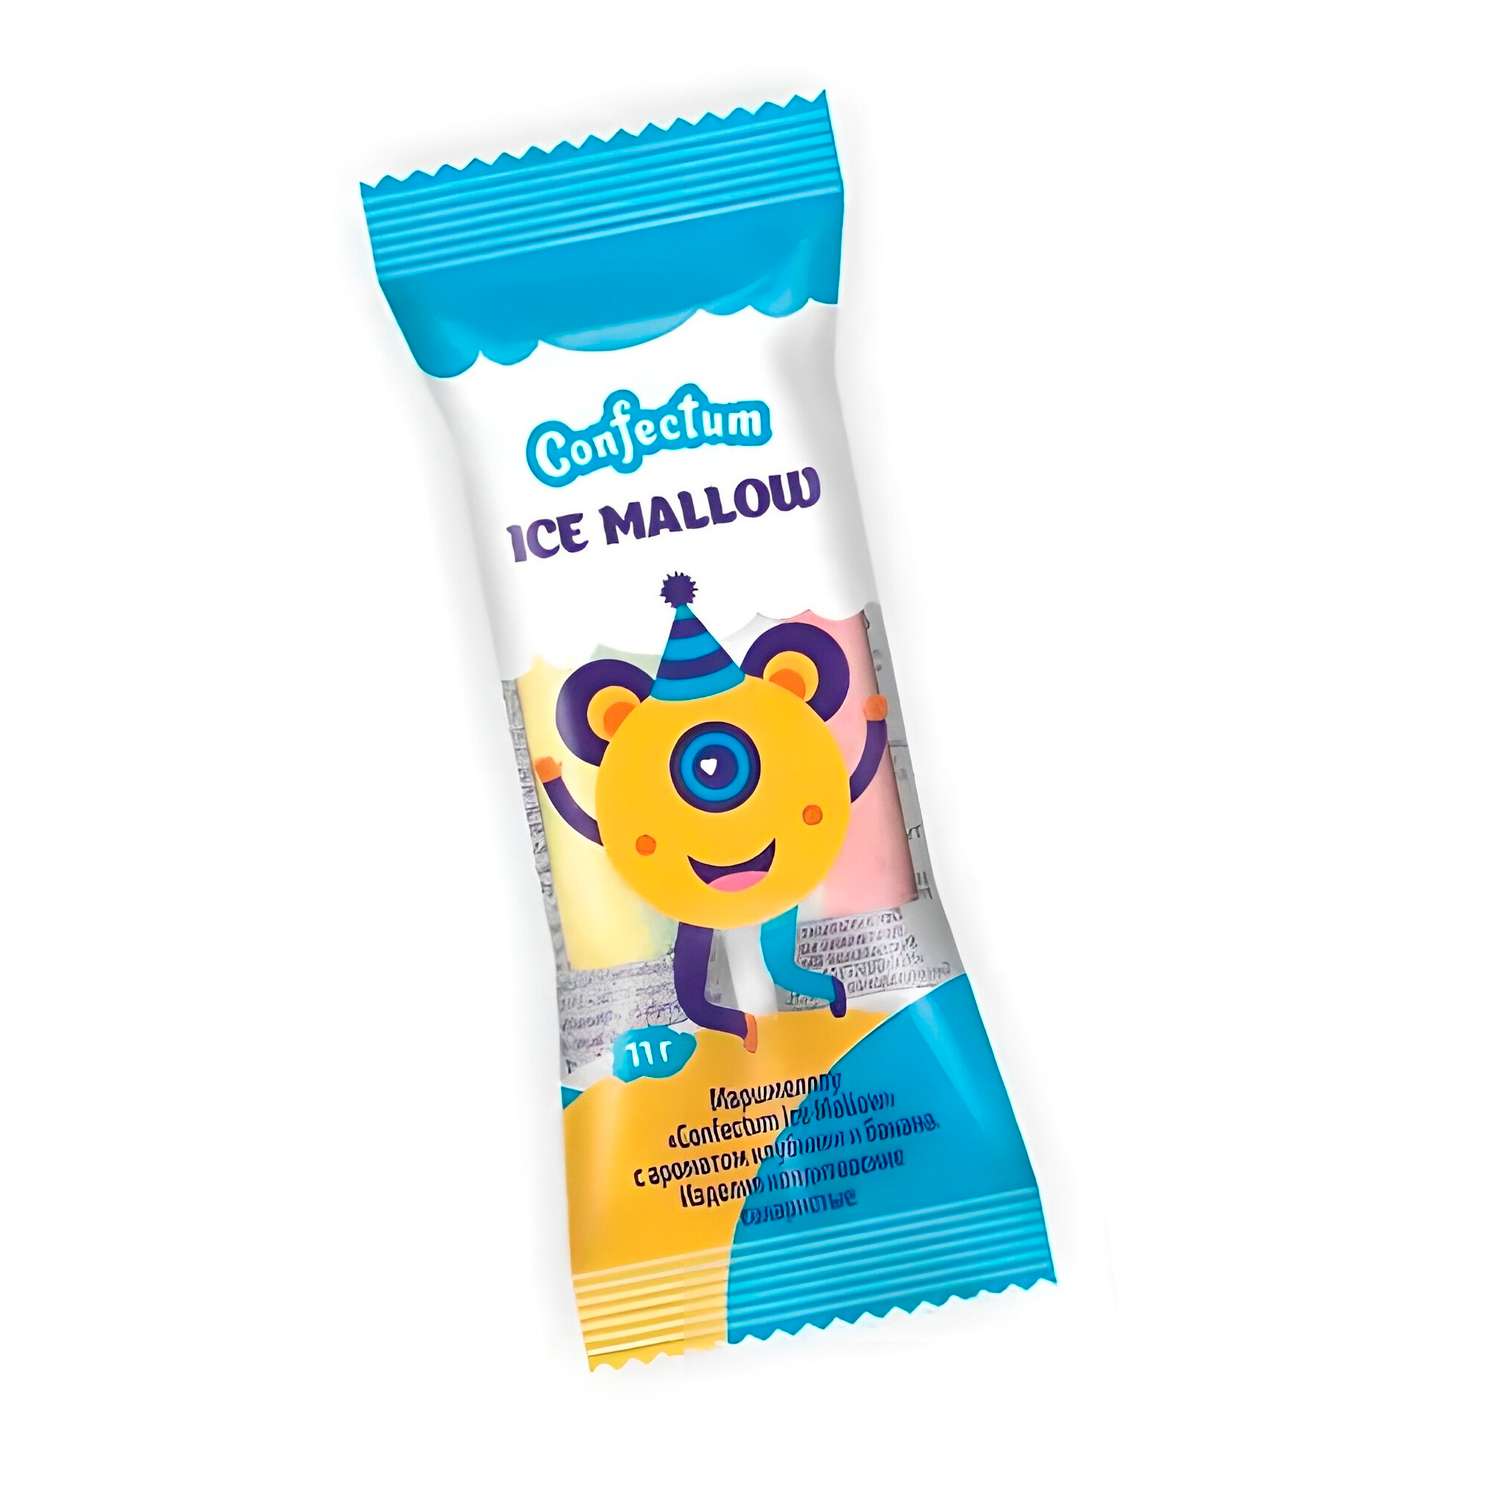 Маршмеллоу Confectum Ice Mallow аромат клубники-банана 11г - фото 1